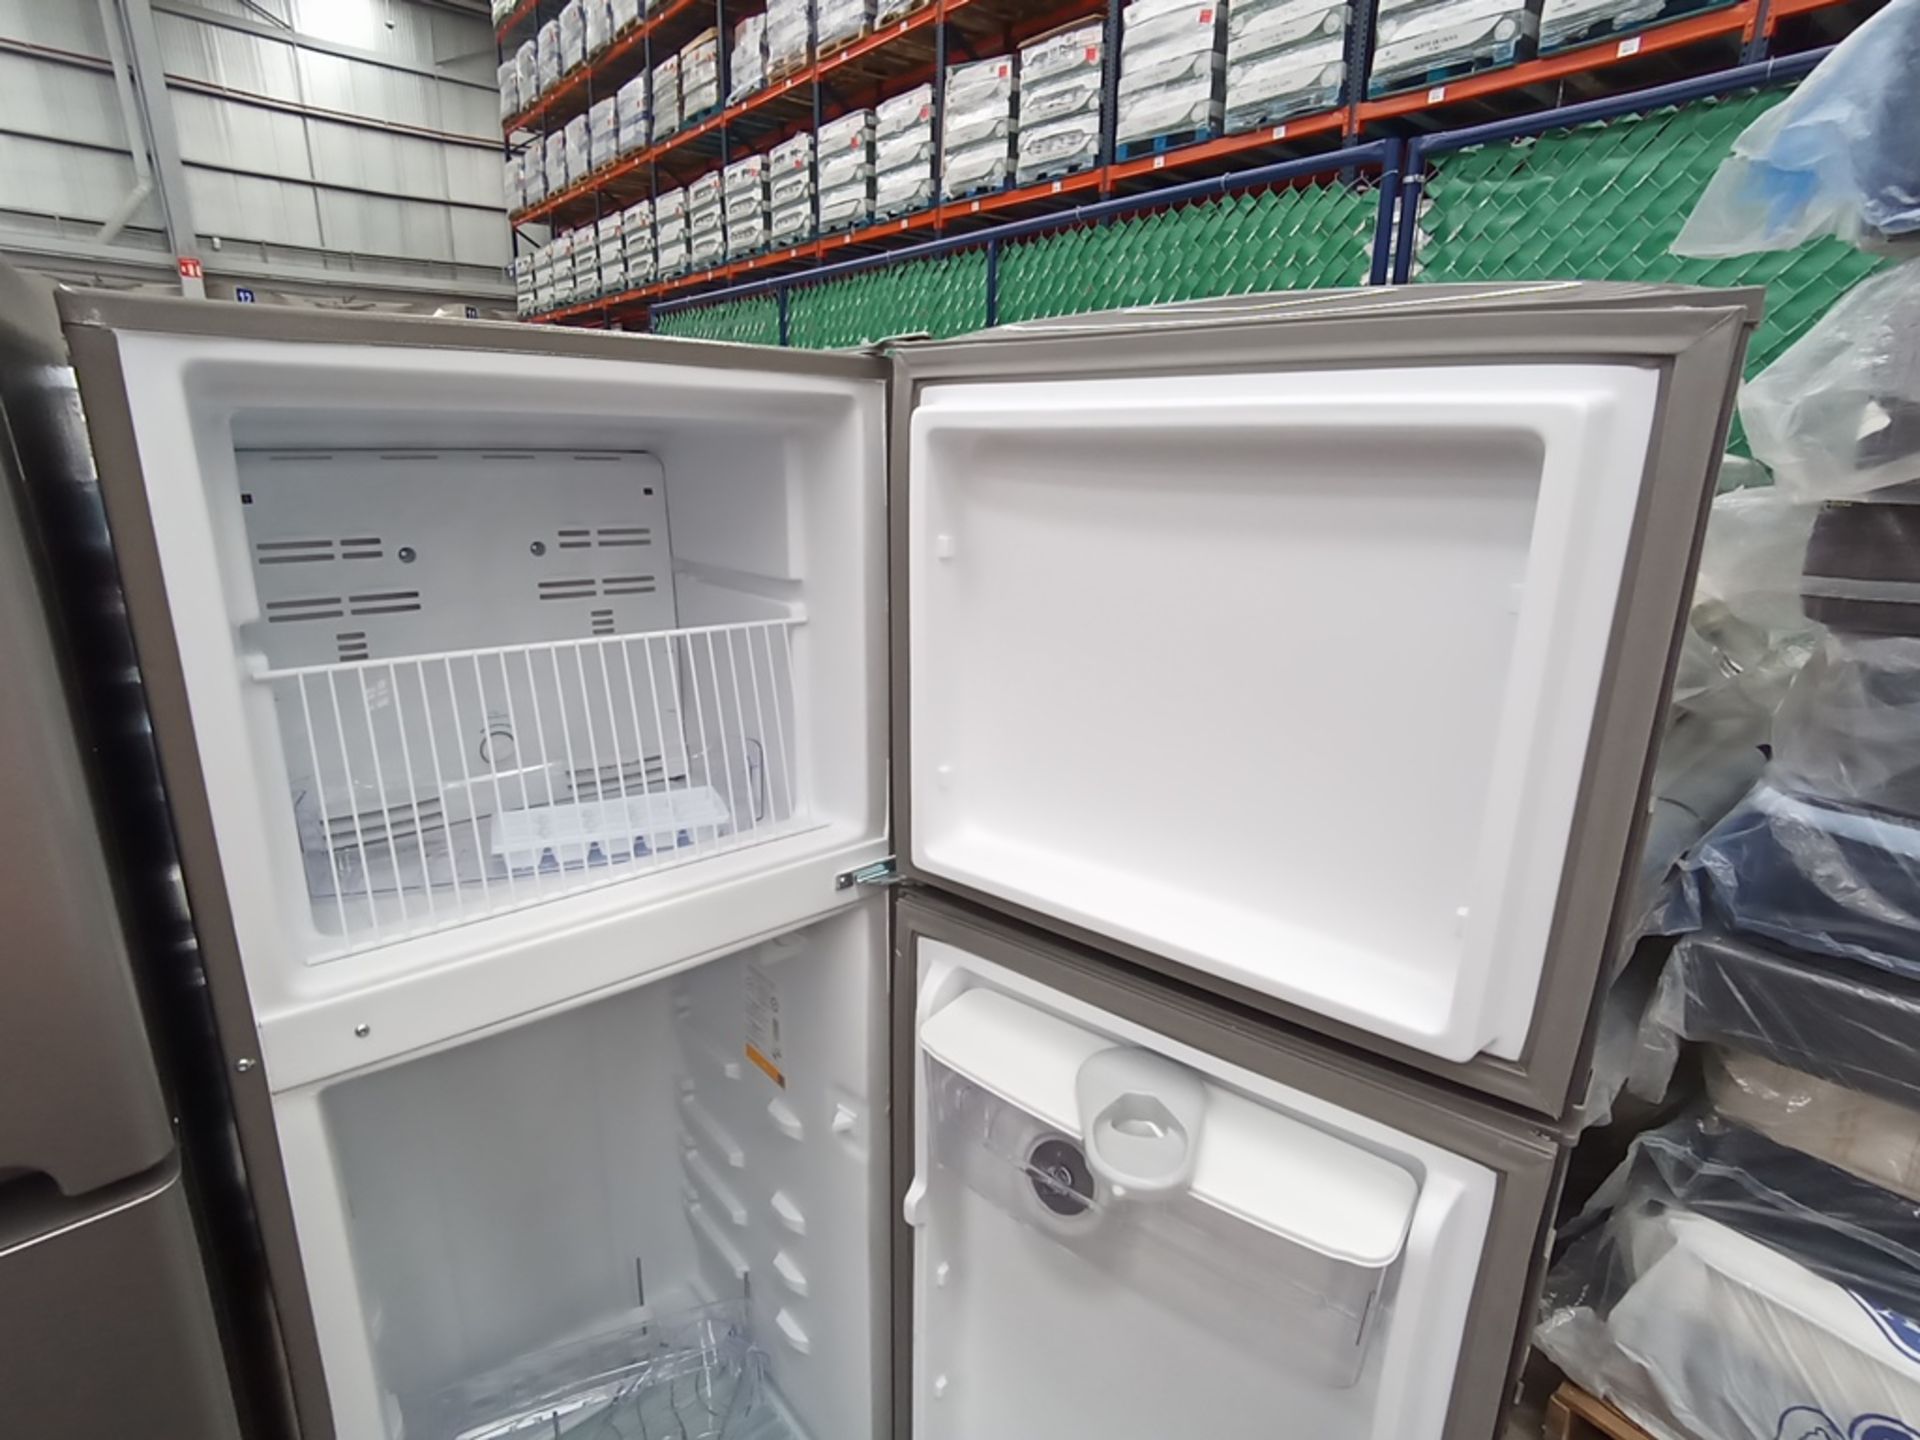 1 Refrigerador con dispensador de agua, marca Acros, Modelo AT096FG01, Serie VRA0636575, Color Gris - Image 8 of 10